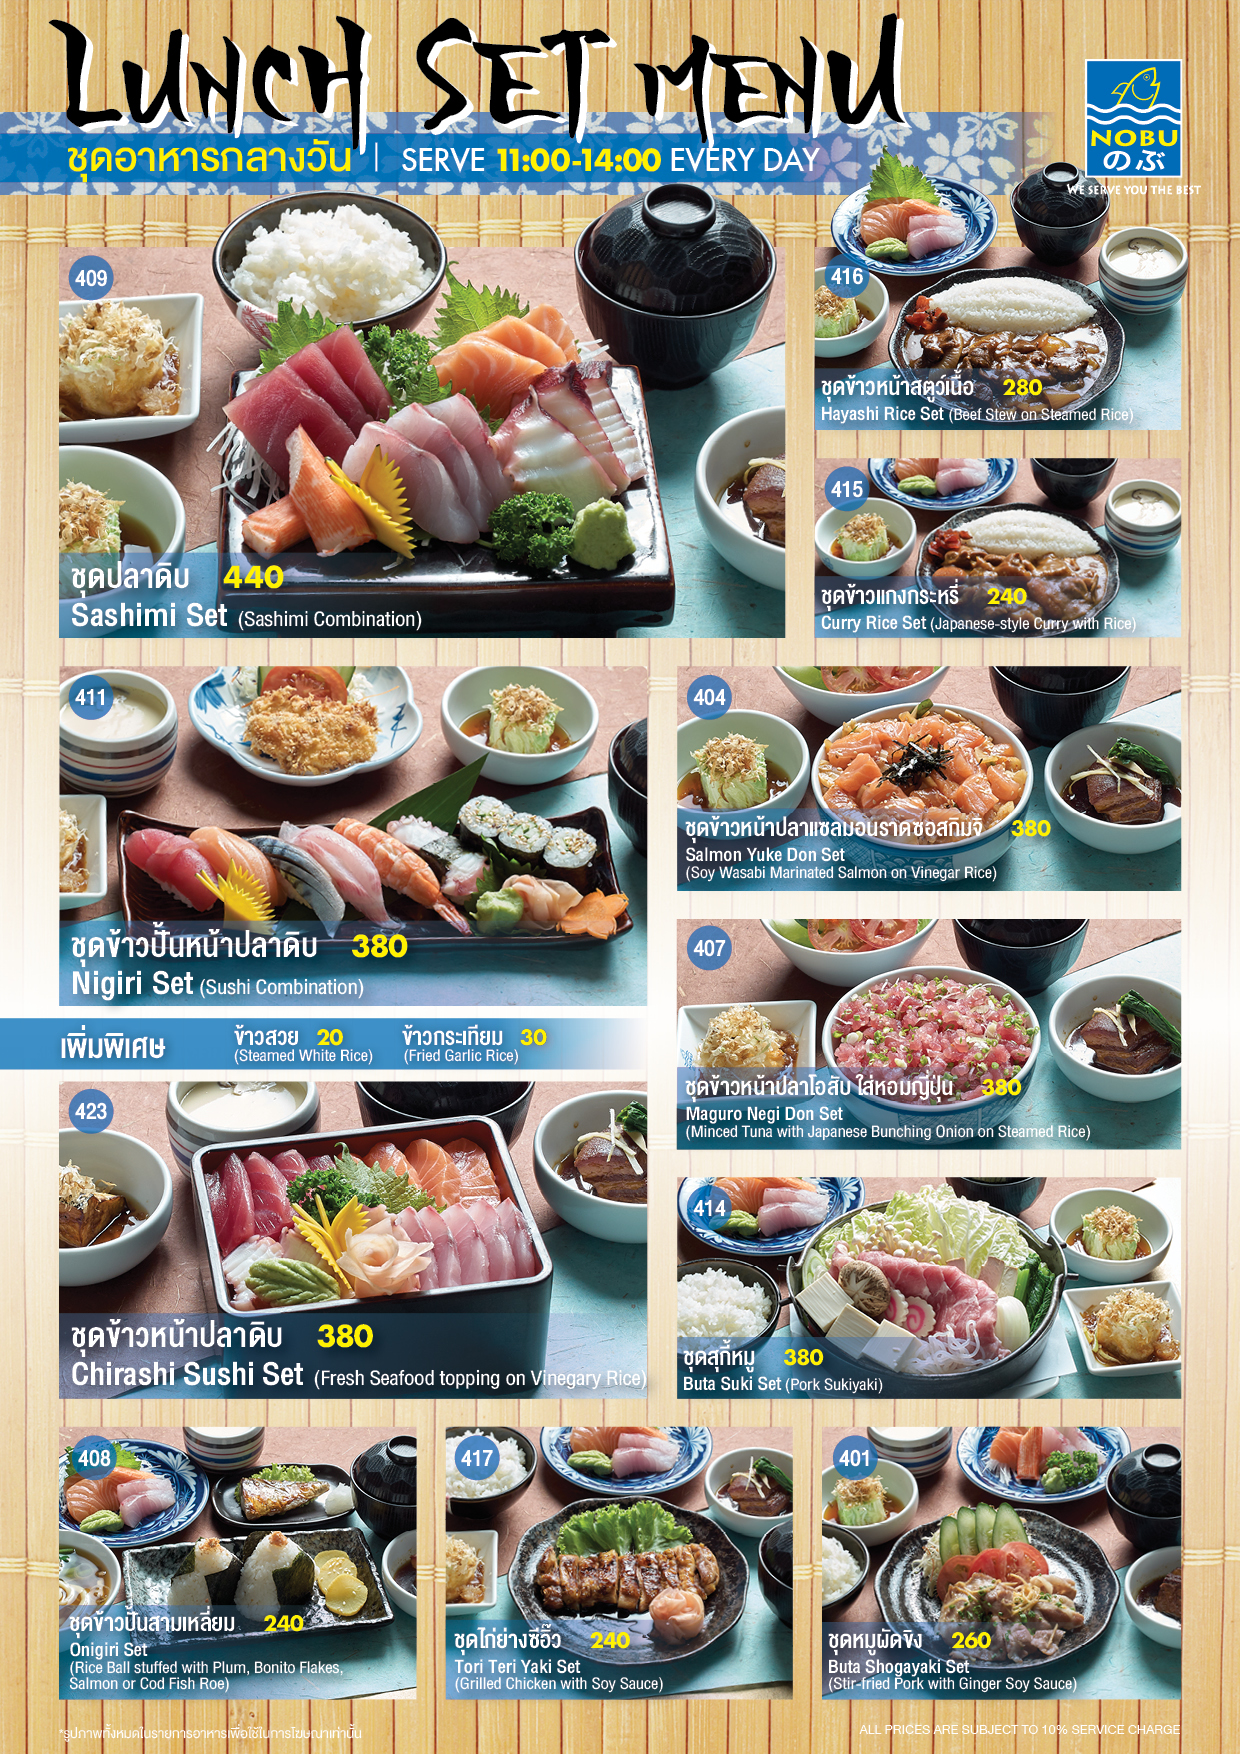 Nobu Japanese Restaurant: Lunch Sets